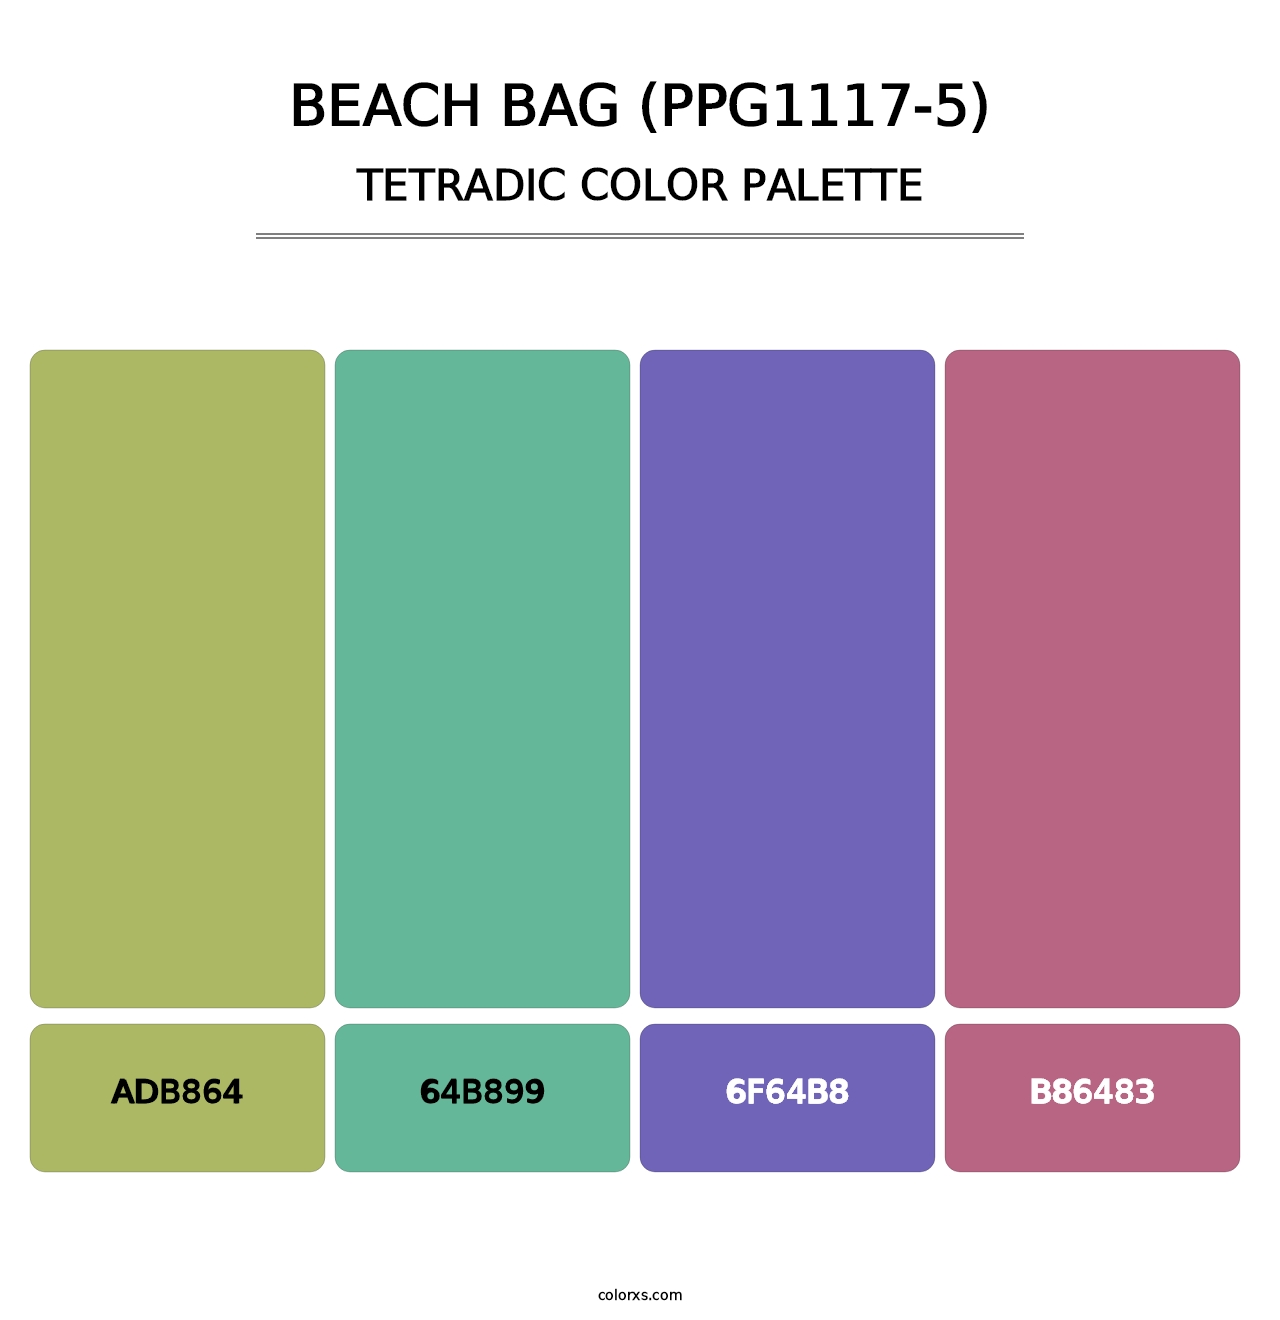 Beach Bag (PPG1117-5) - Tetradic Color Palette